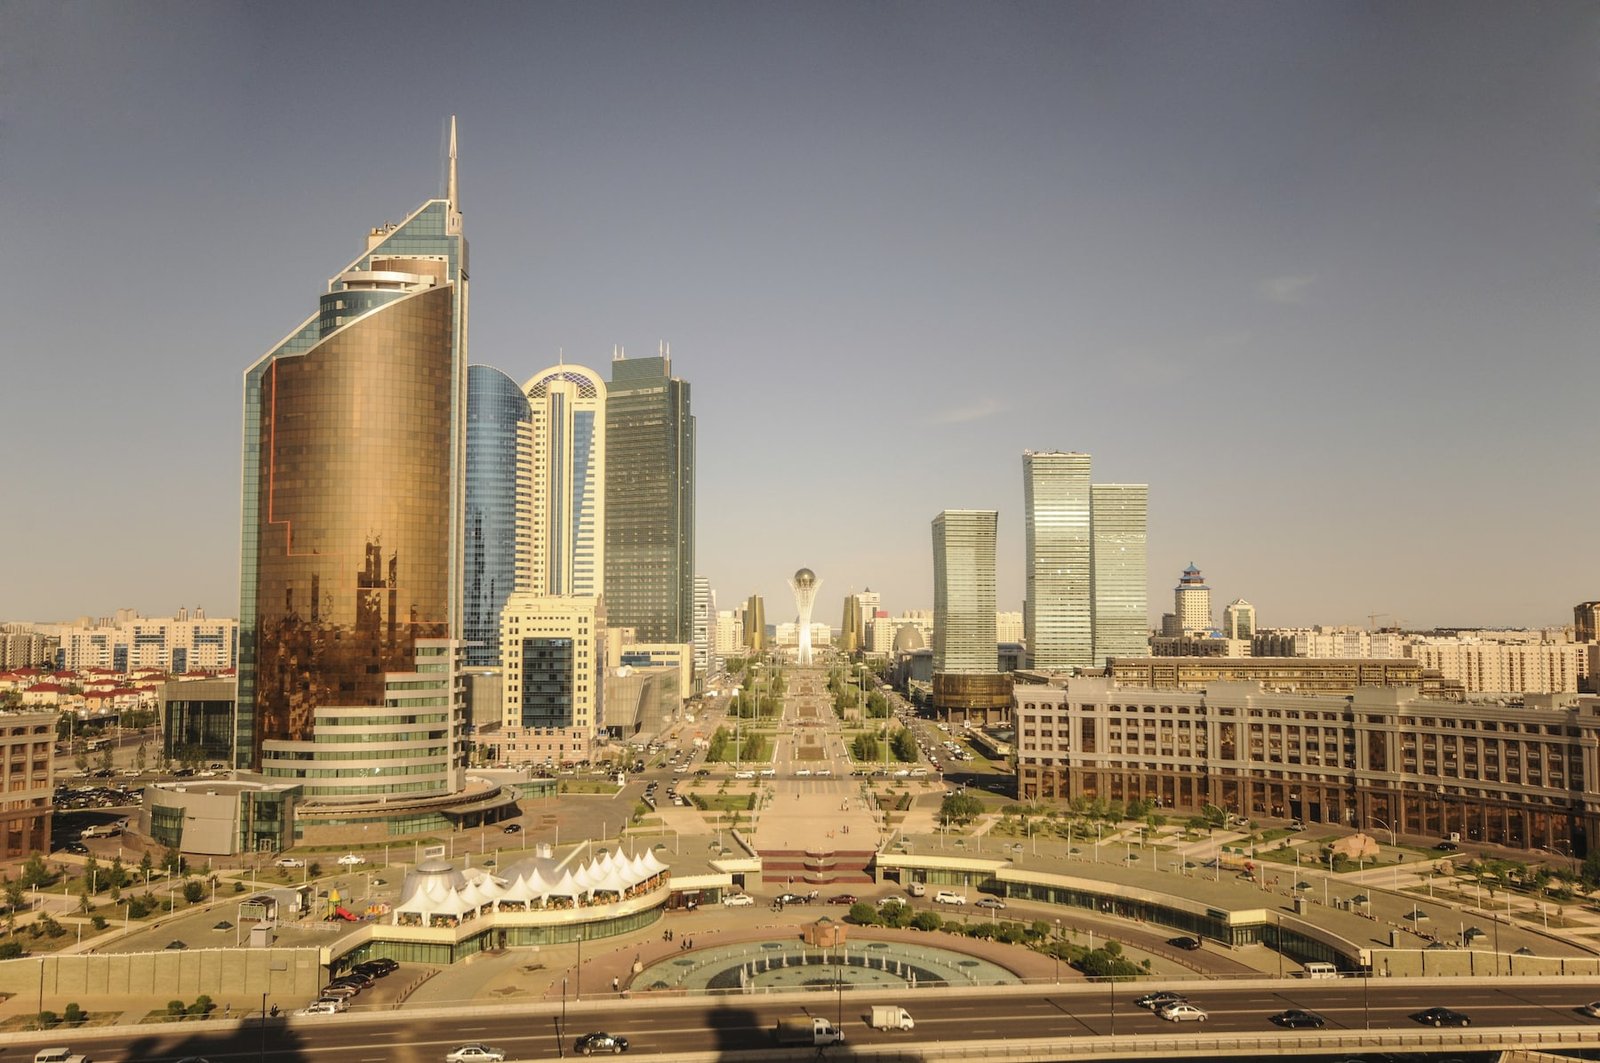 Países más grandes: Rascacielos en Astana, capital de Kazajistán